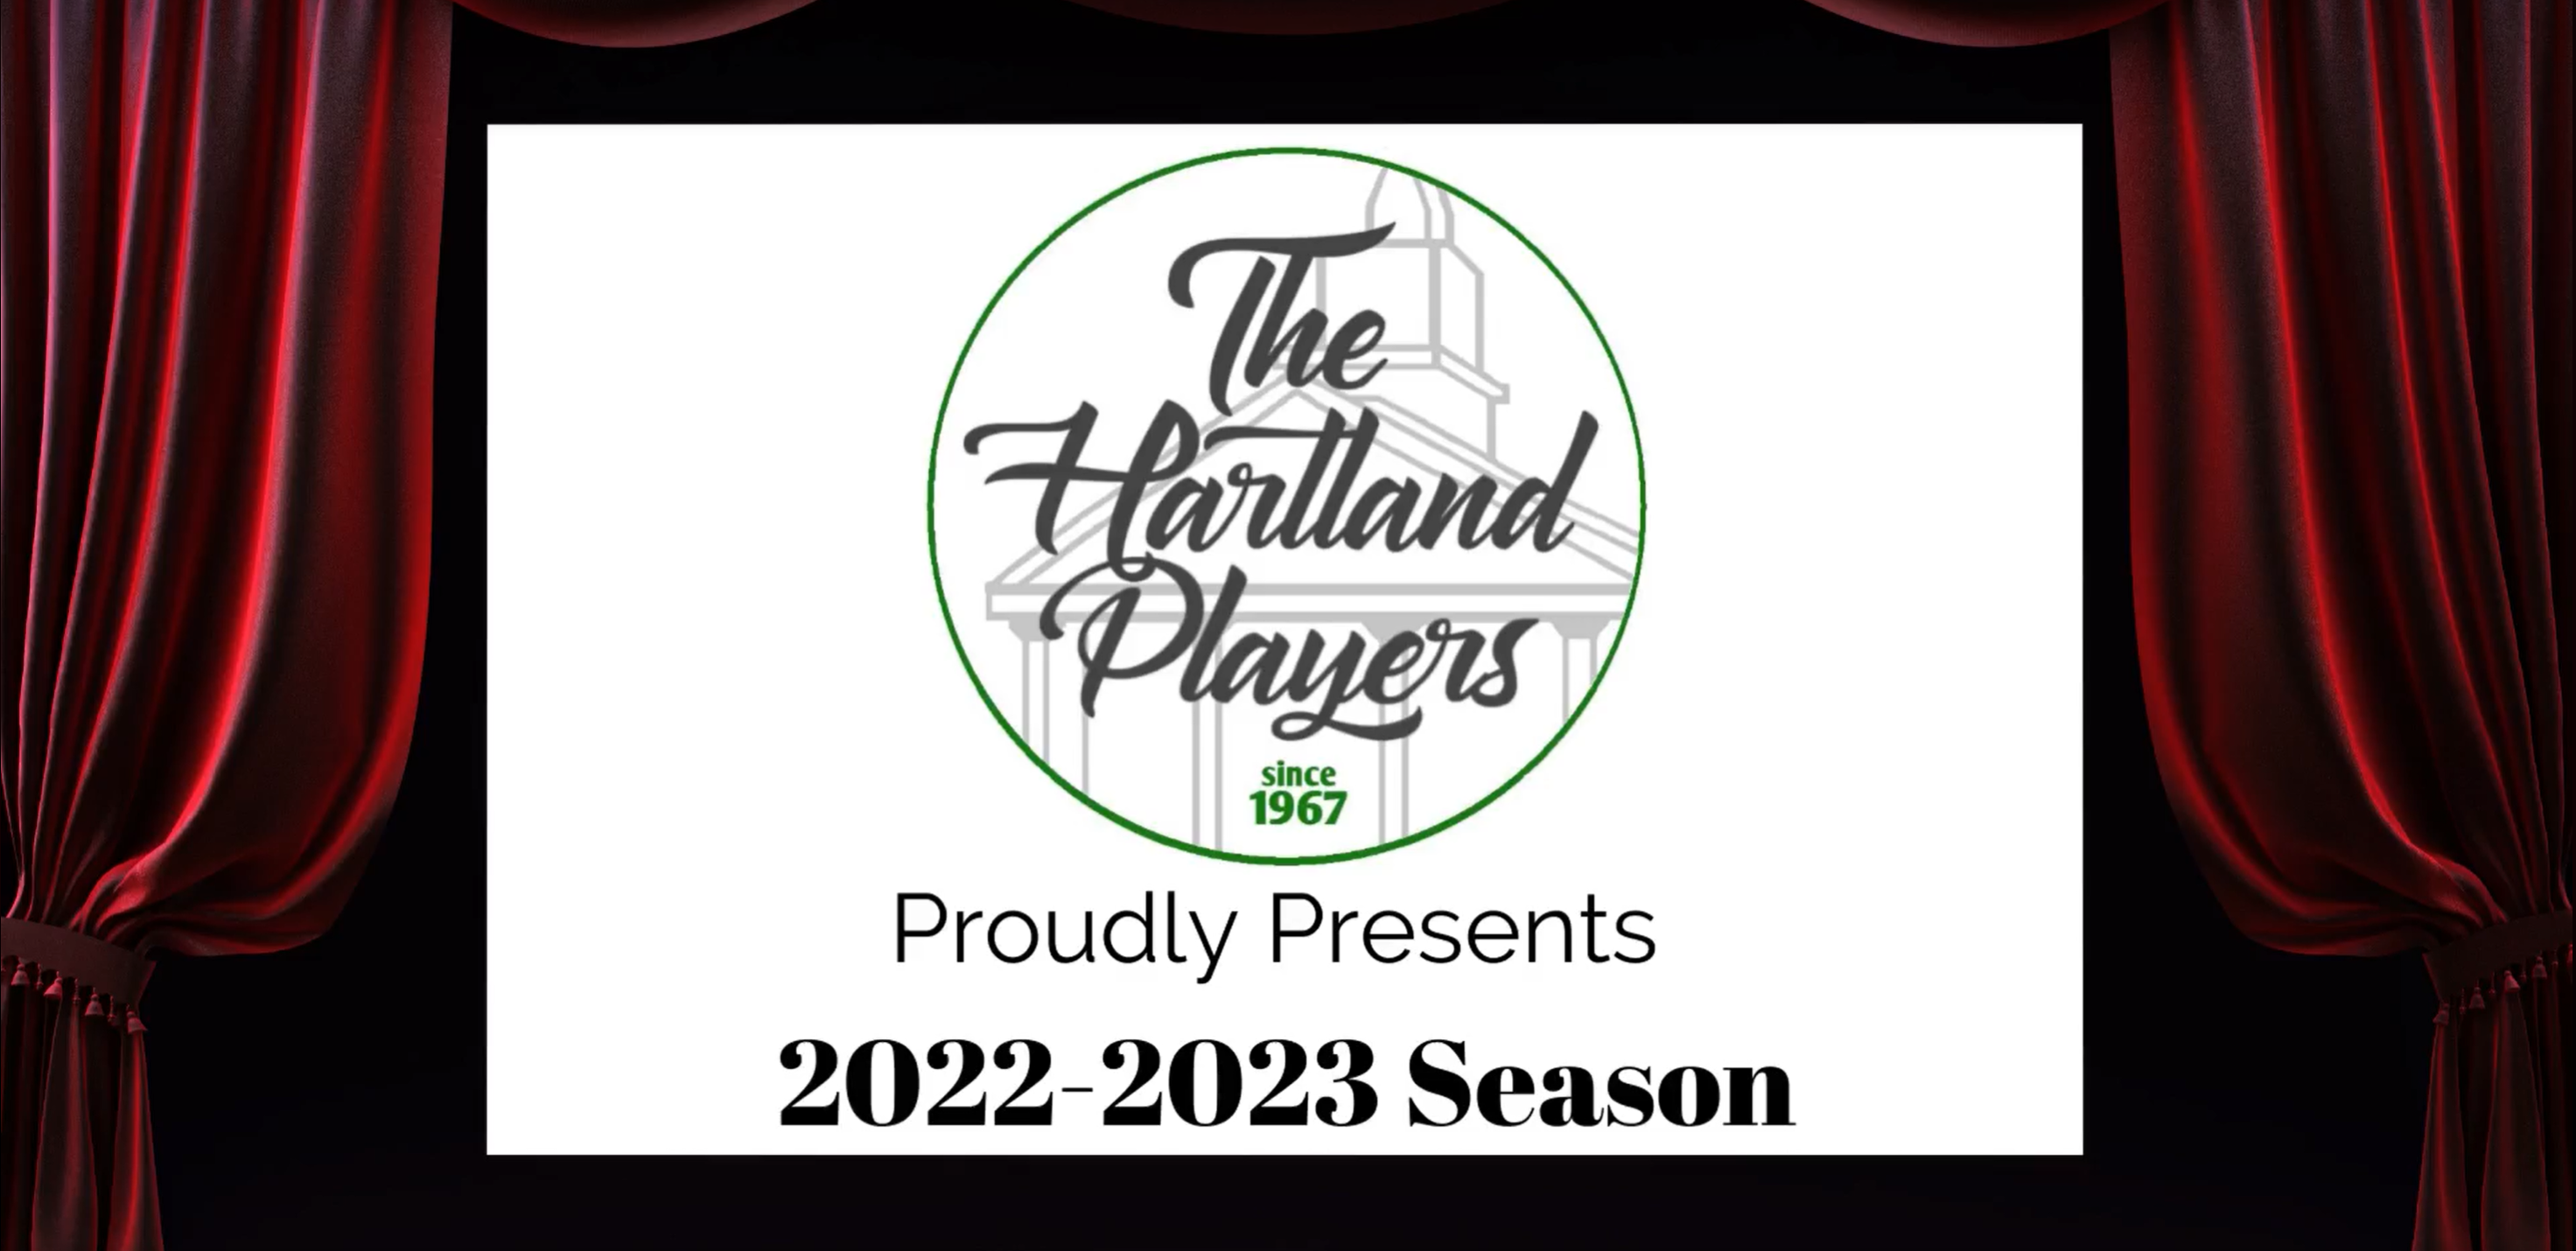 Announcing the Hartland Players’ 2022/2023 Season